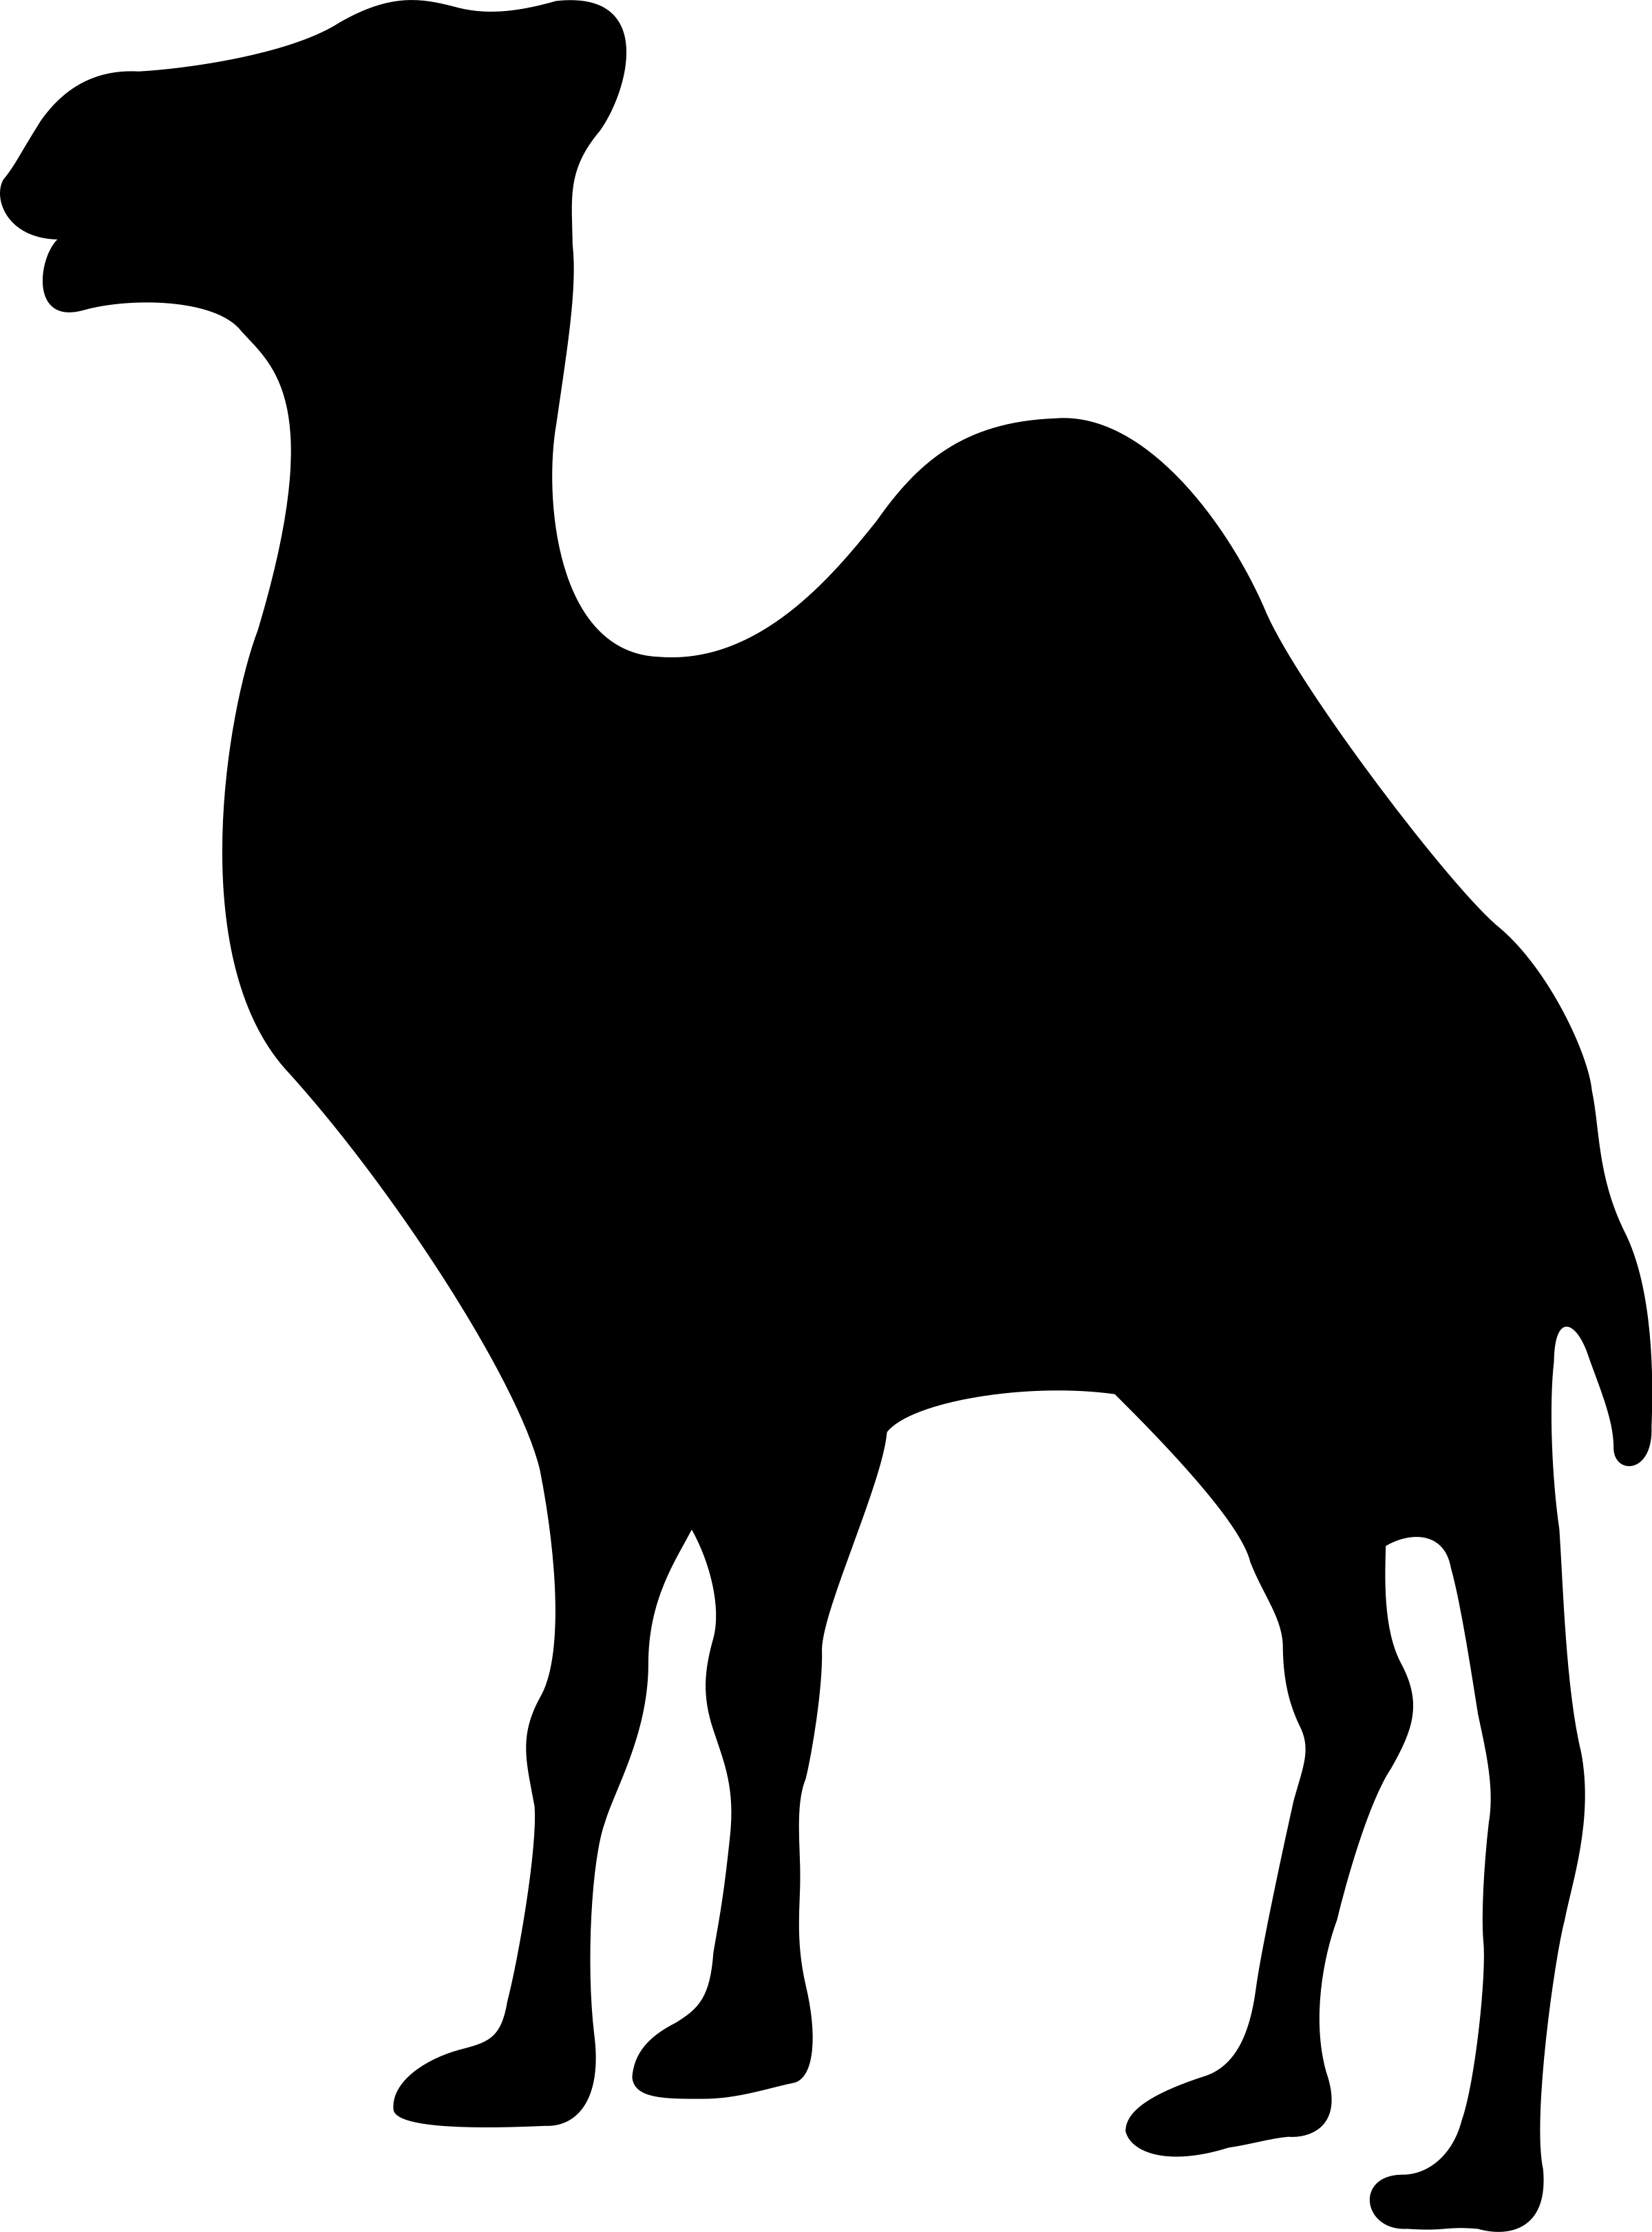 Camel Logo Black And White - Camel Symbol (3700x5000)